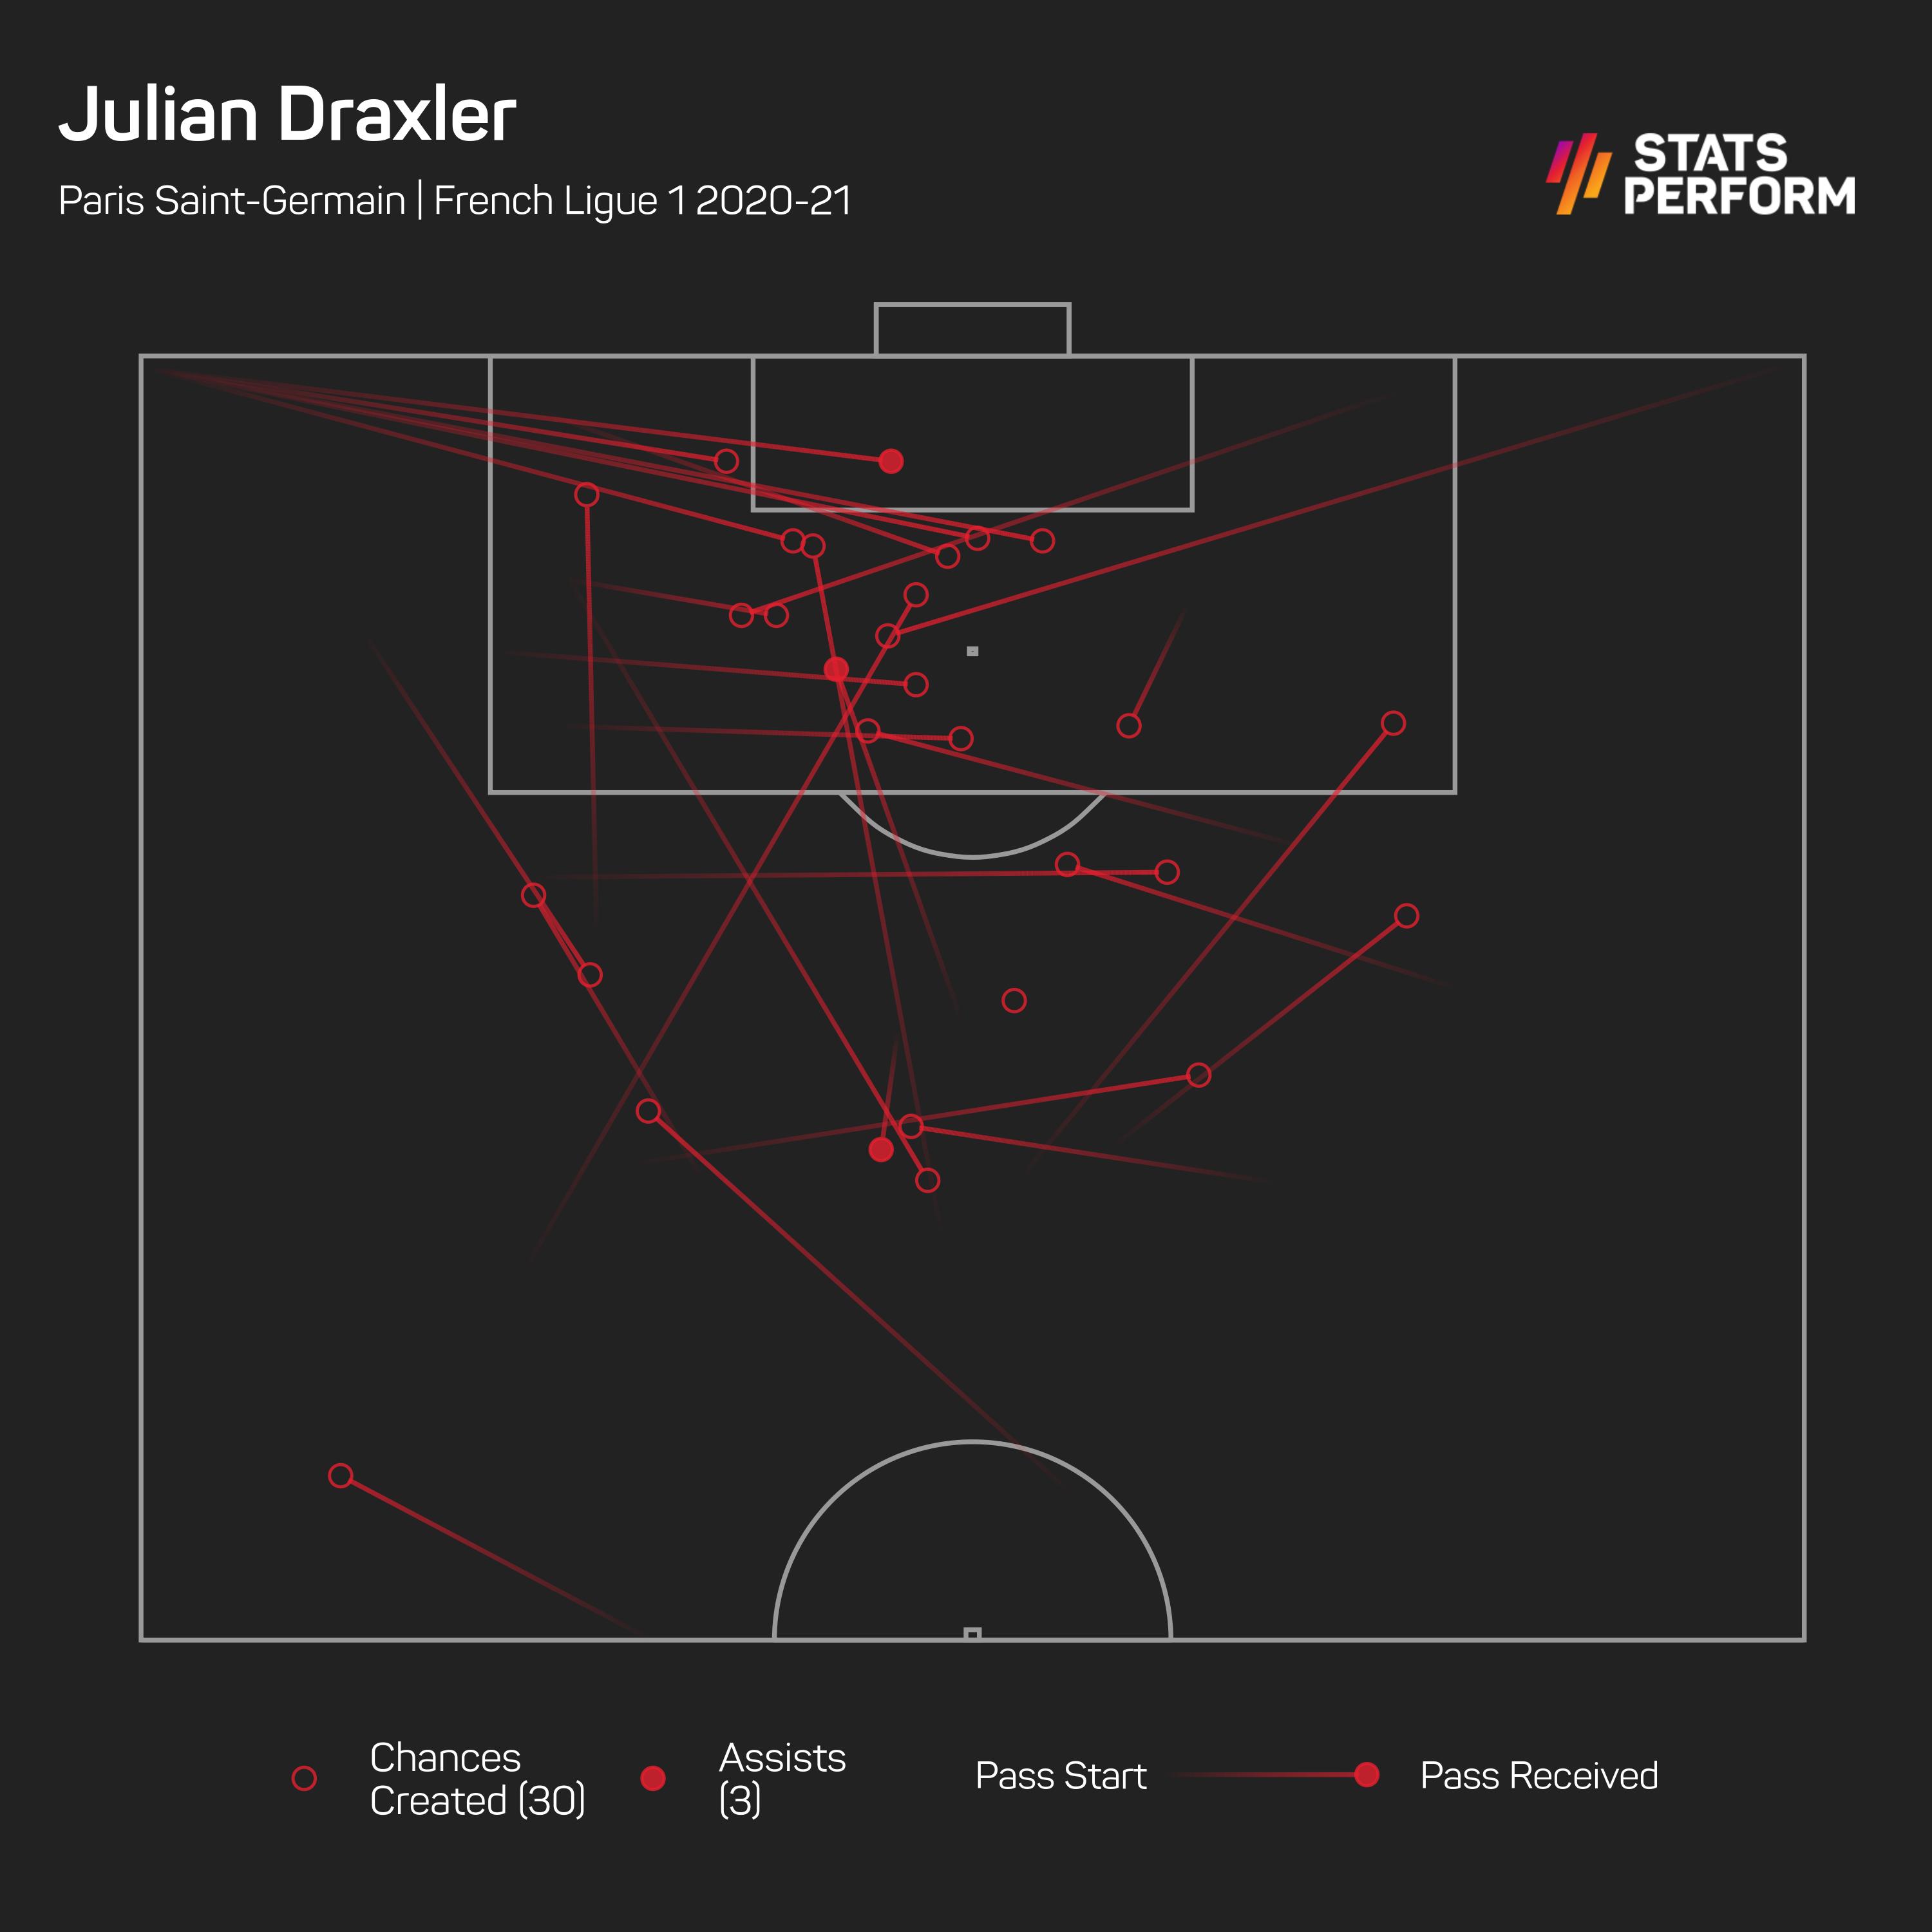 Julian Draxler chances created